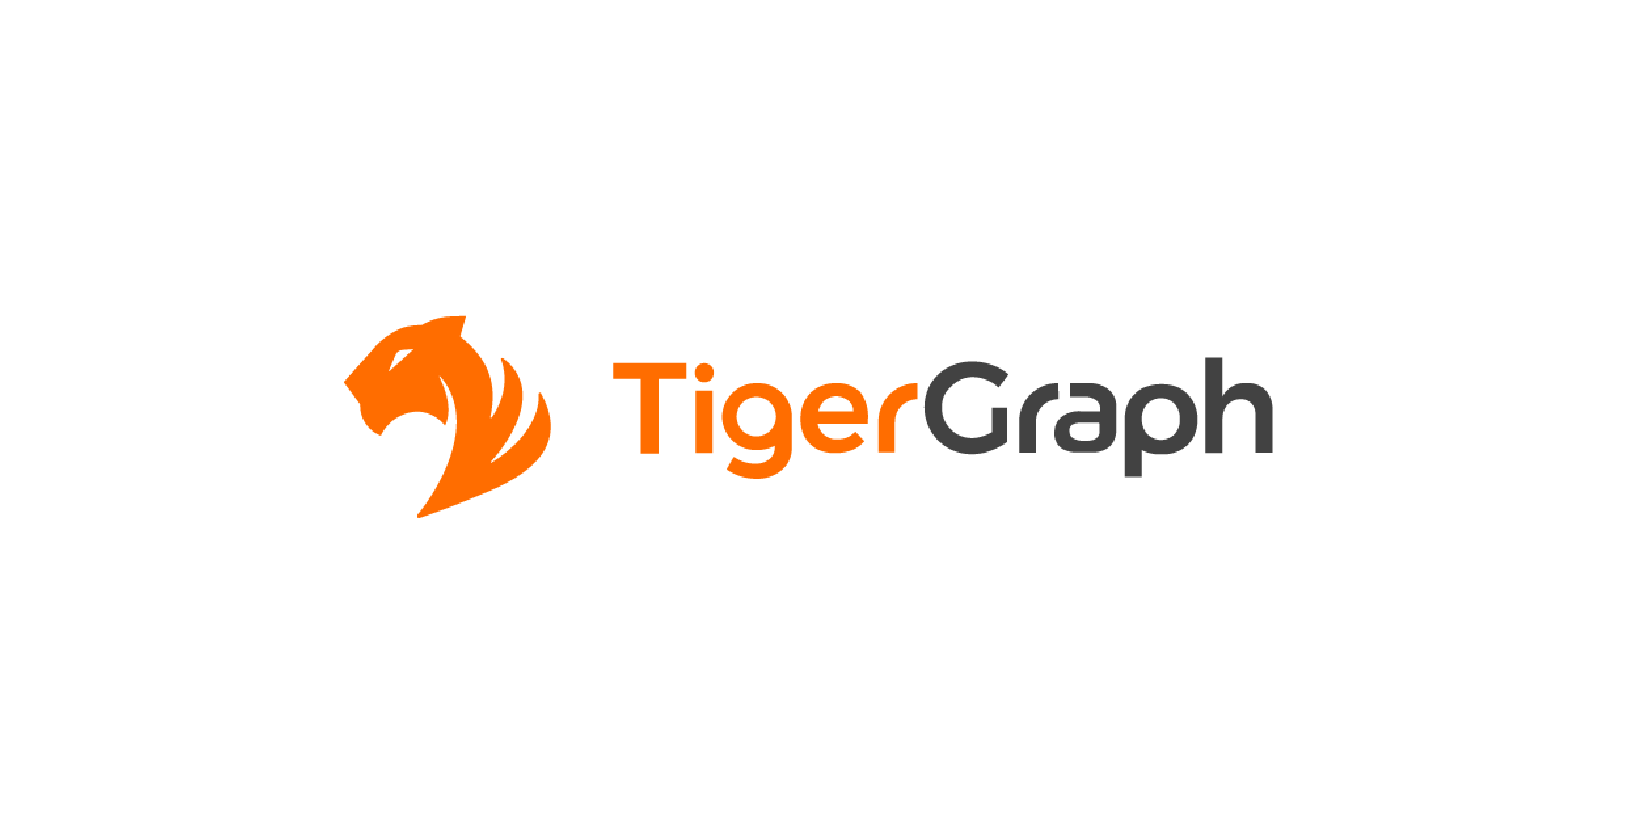 VisionFund Portfolio Company TigerGraph's Logo